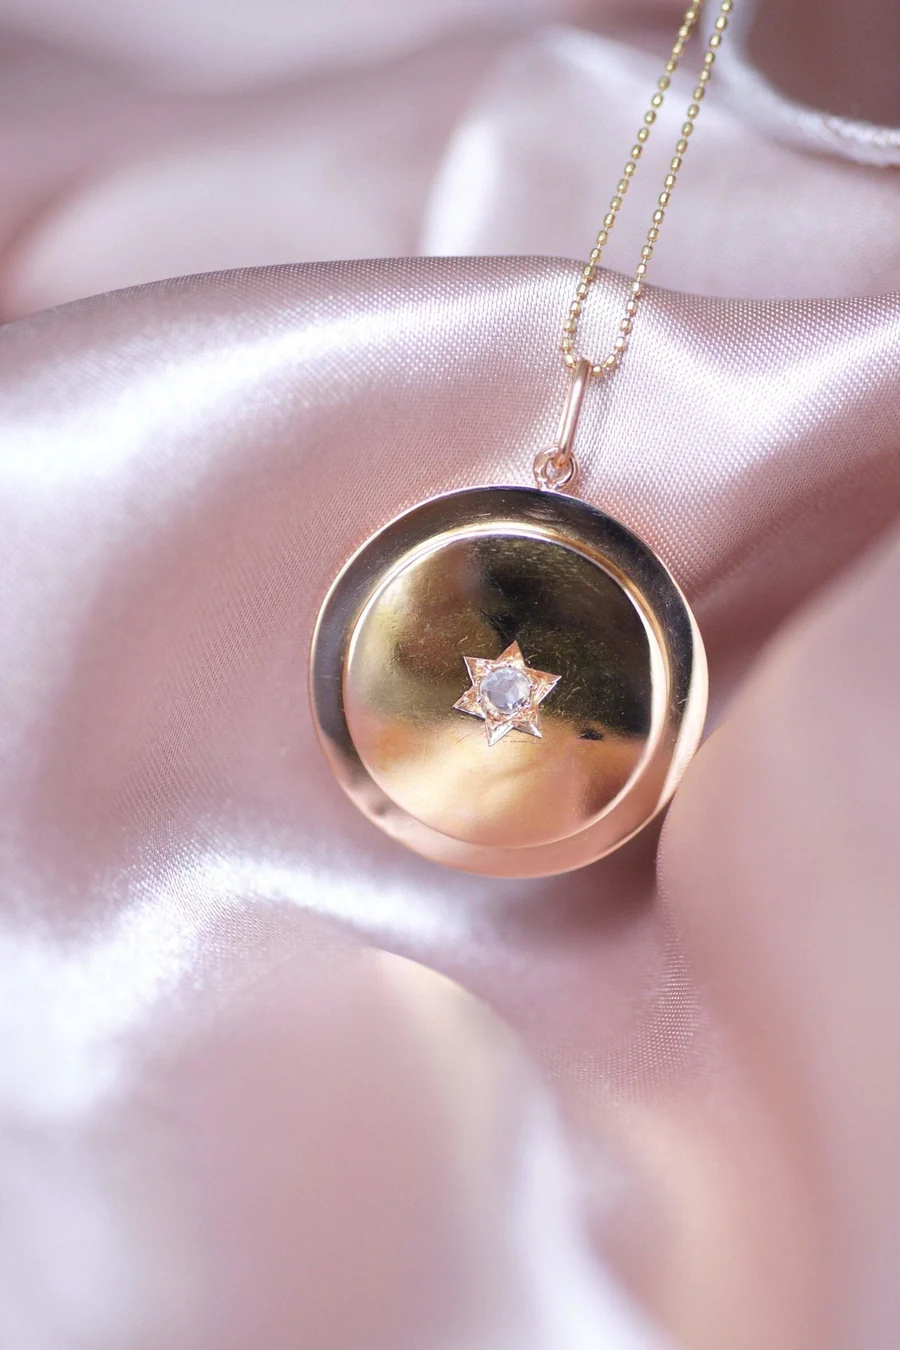 Round antique gold and diamond pendant - Penelope Gallery